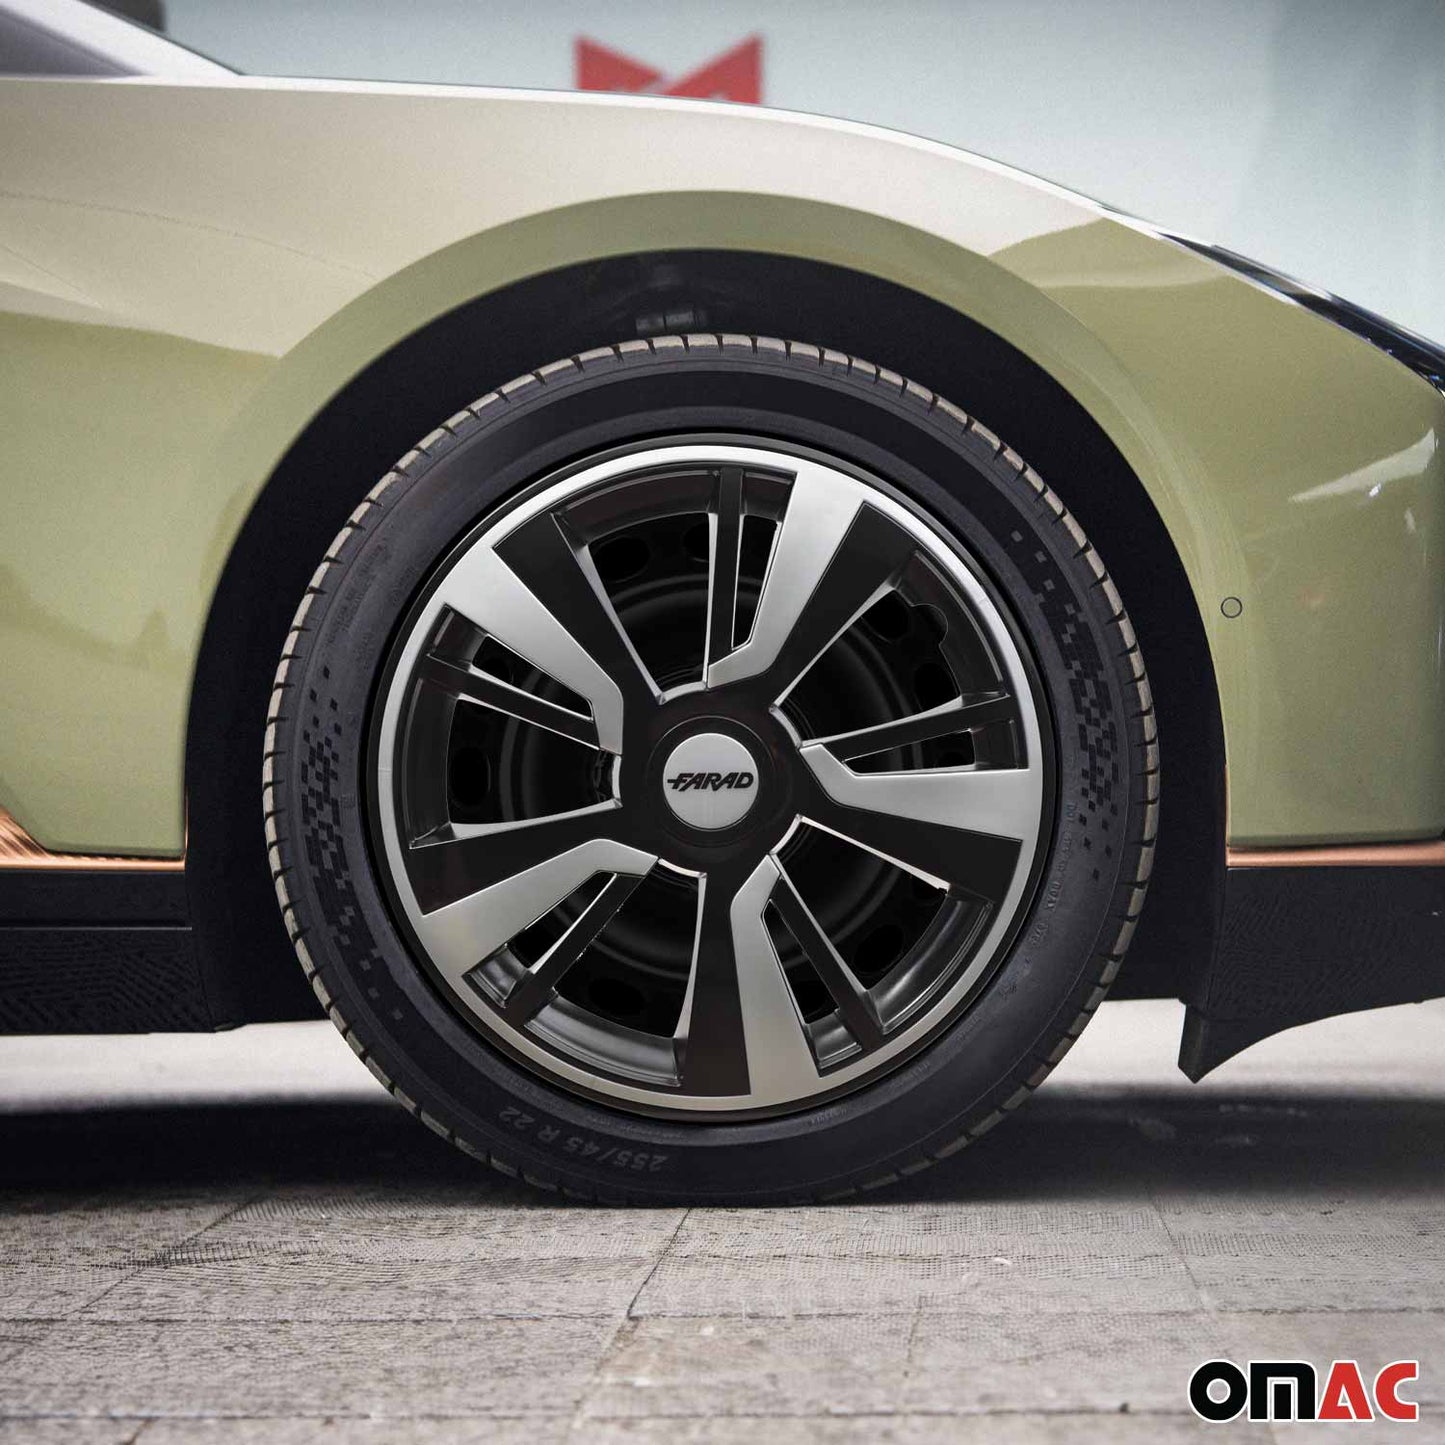 OMAC 16" Hubcaps Wheel Rim Cover Black with Light Grey Insert 4pcs Set VRT99FR243B16LG